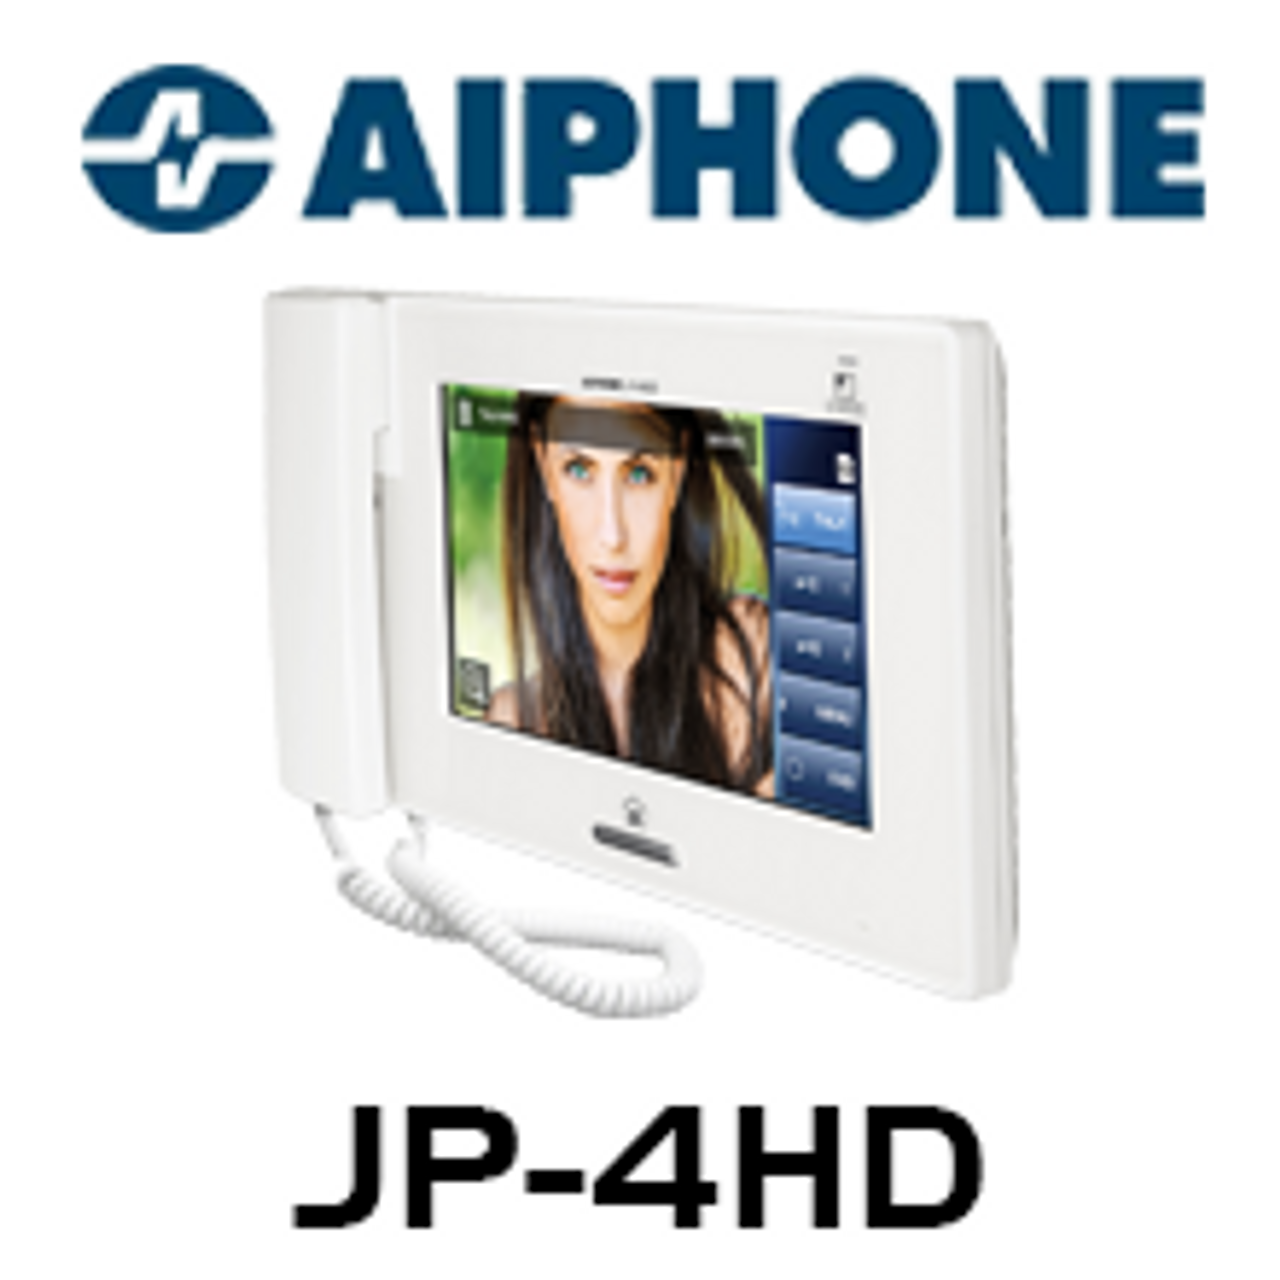 Aiphone JP-4HD 7" LCD Touch Screen PTZ Video Intercom - Sub Master